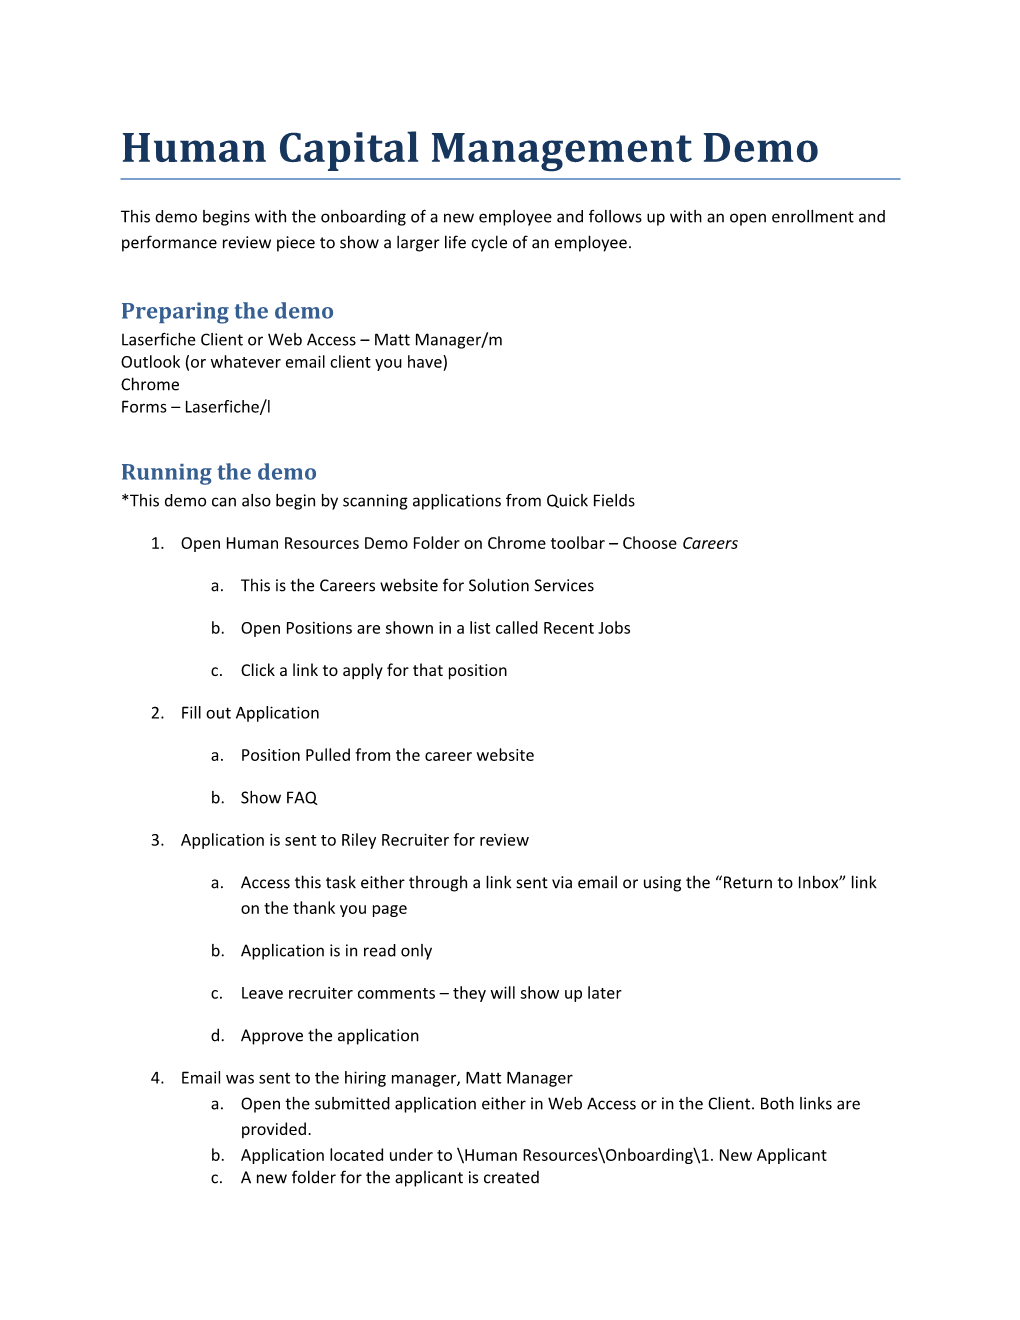 Human Capital Management Demo